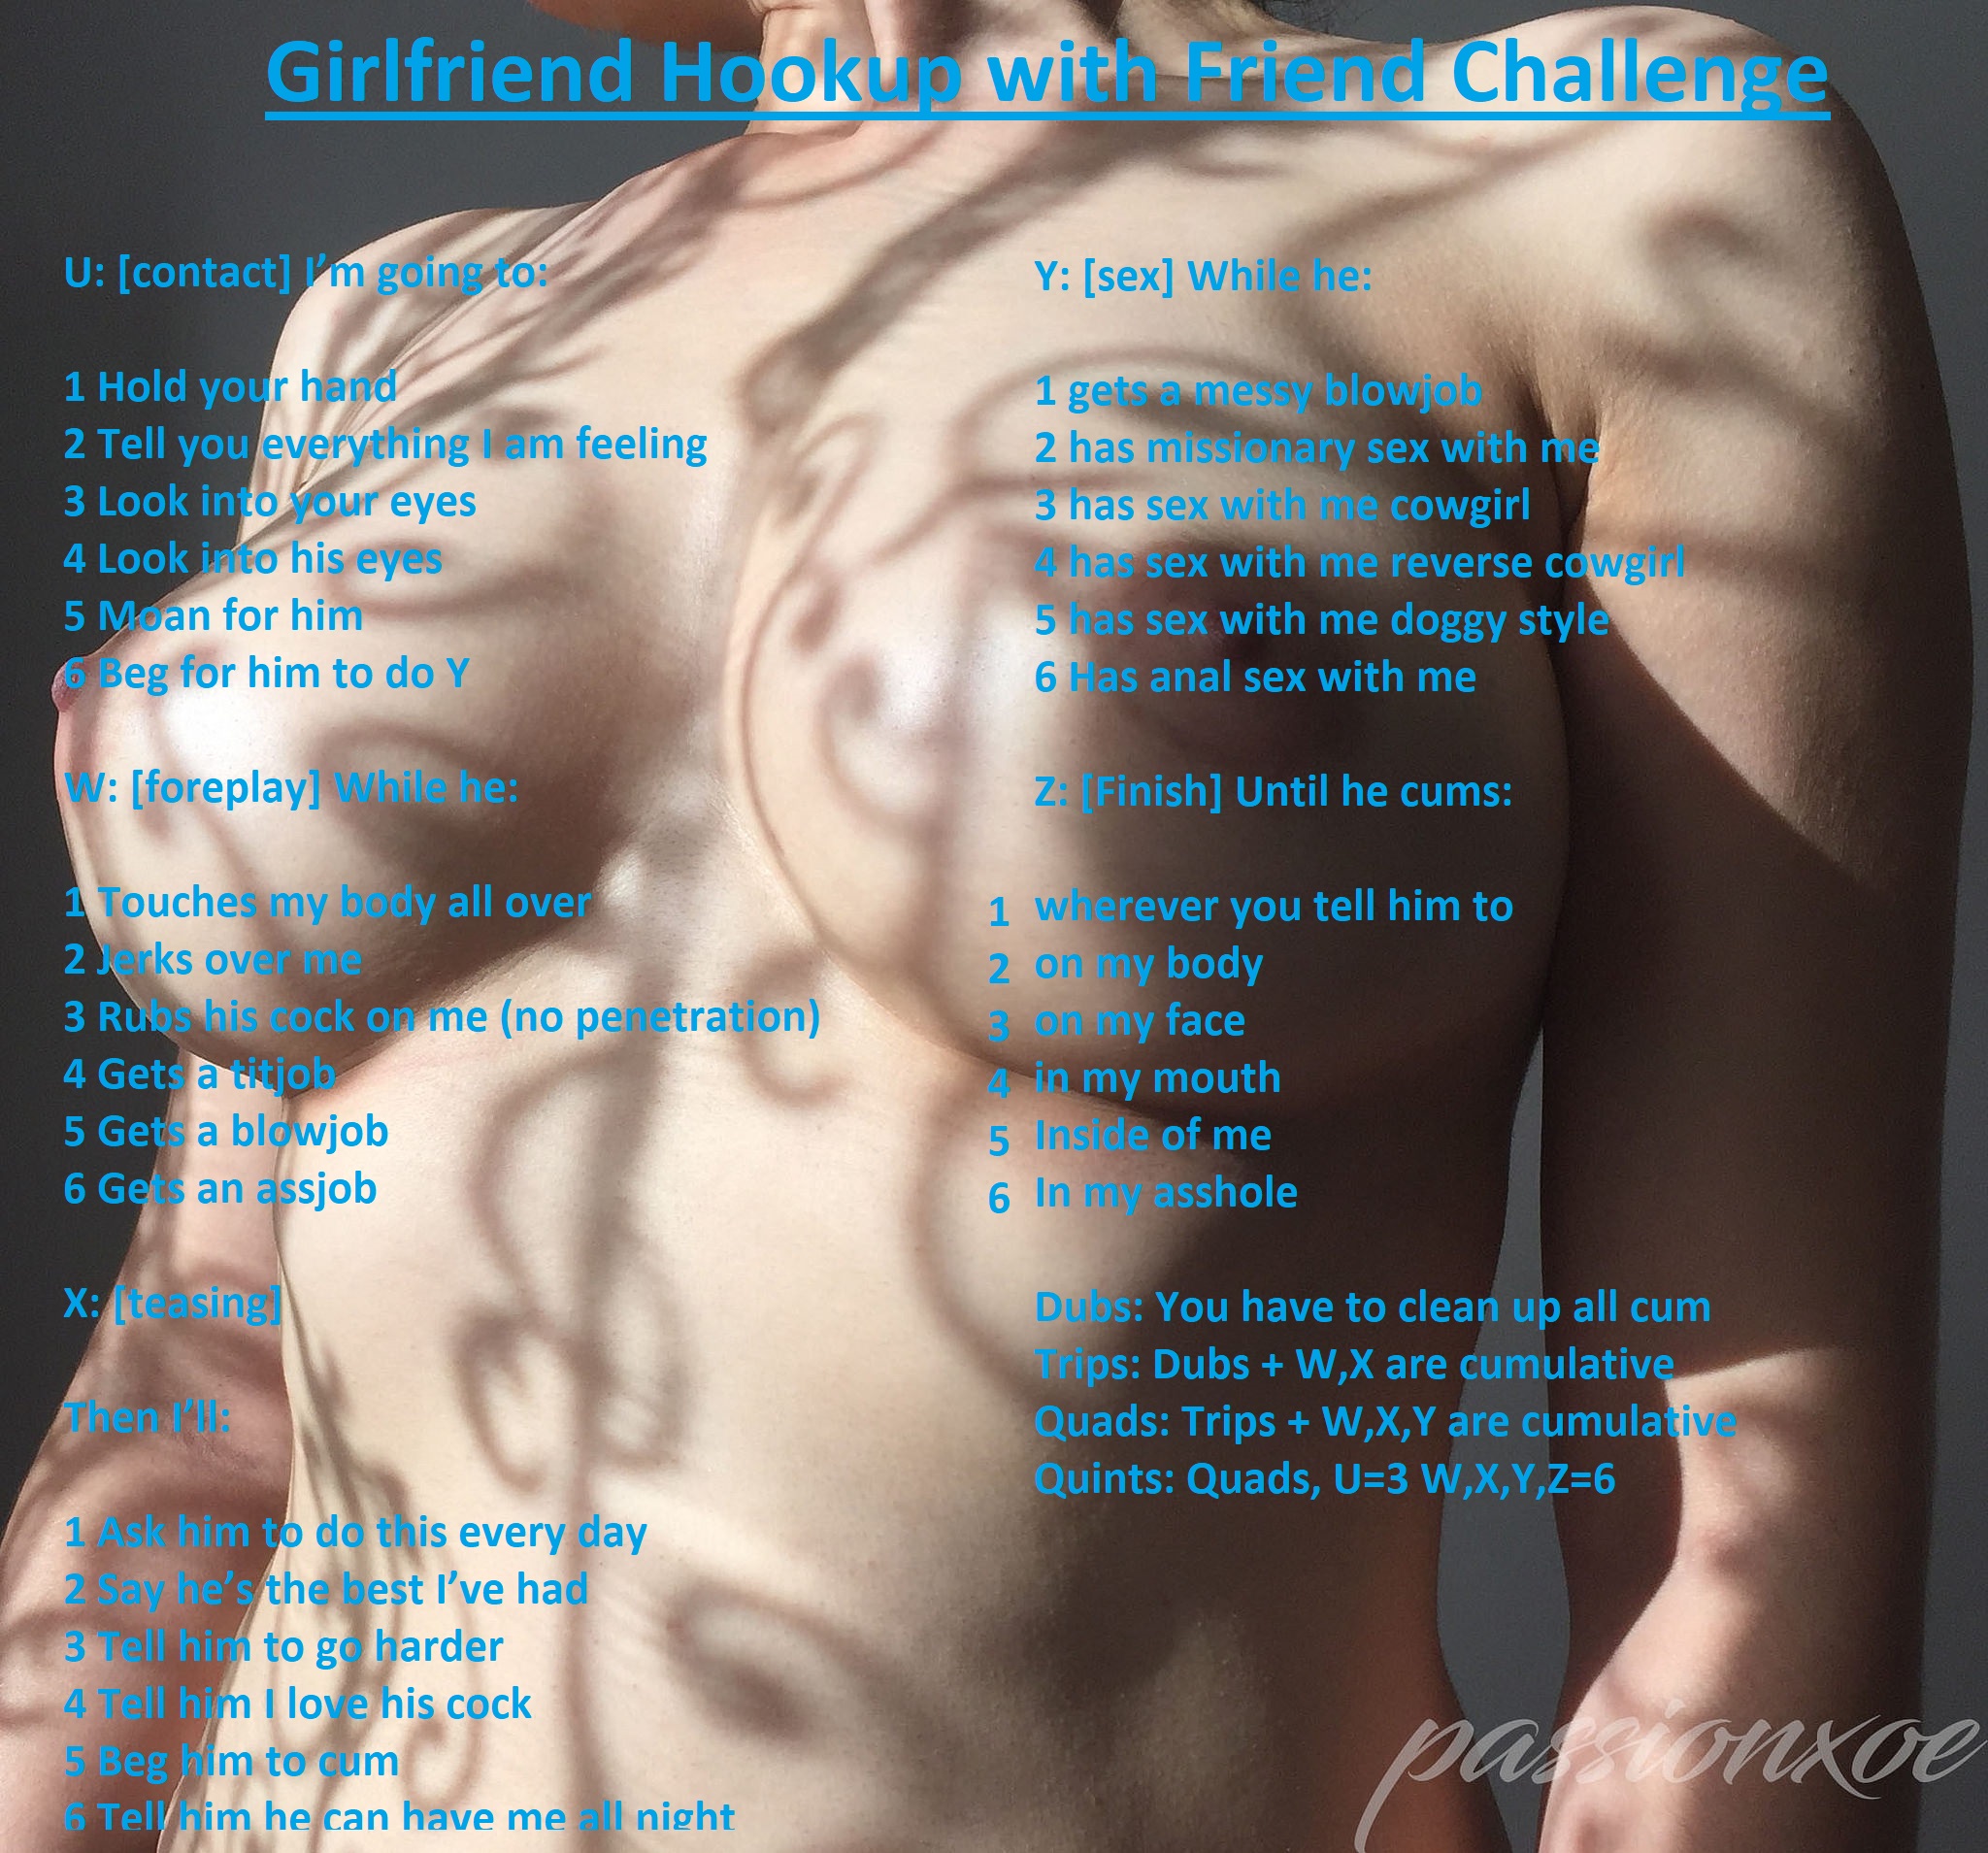 Girlfriend Hookup with Friend Challenge image